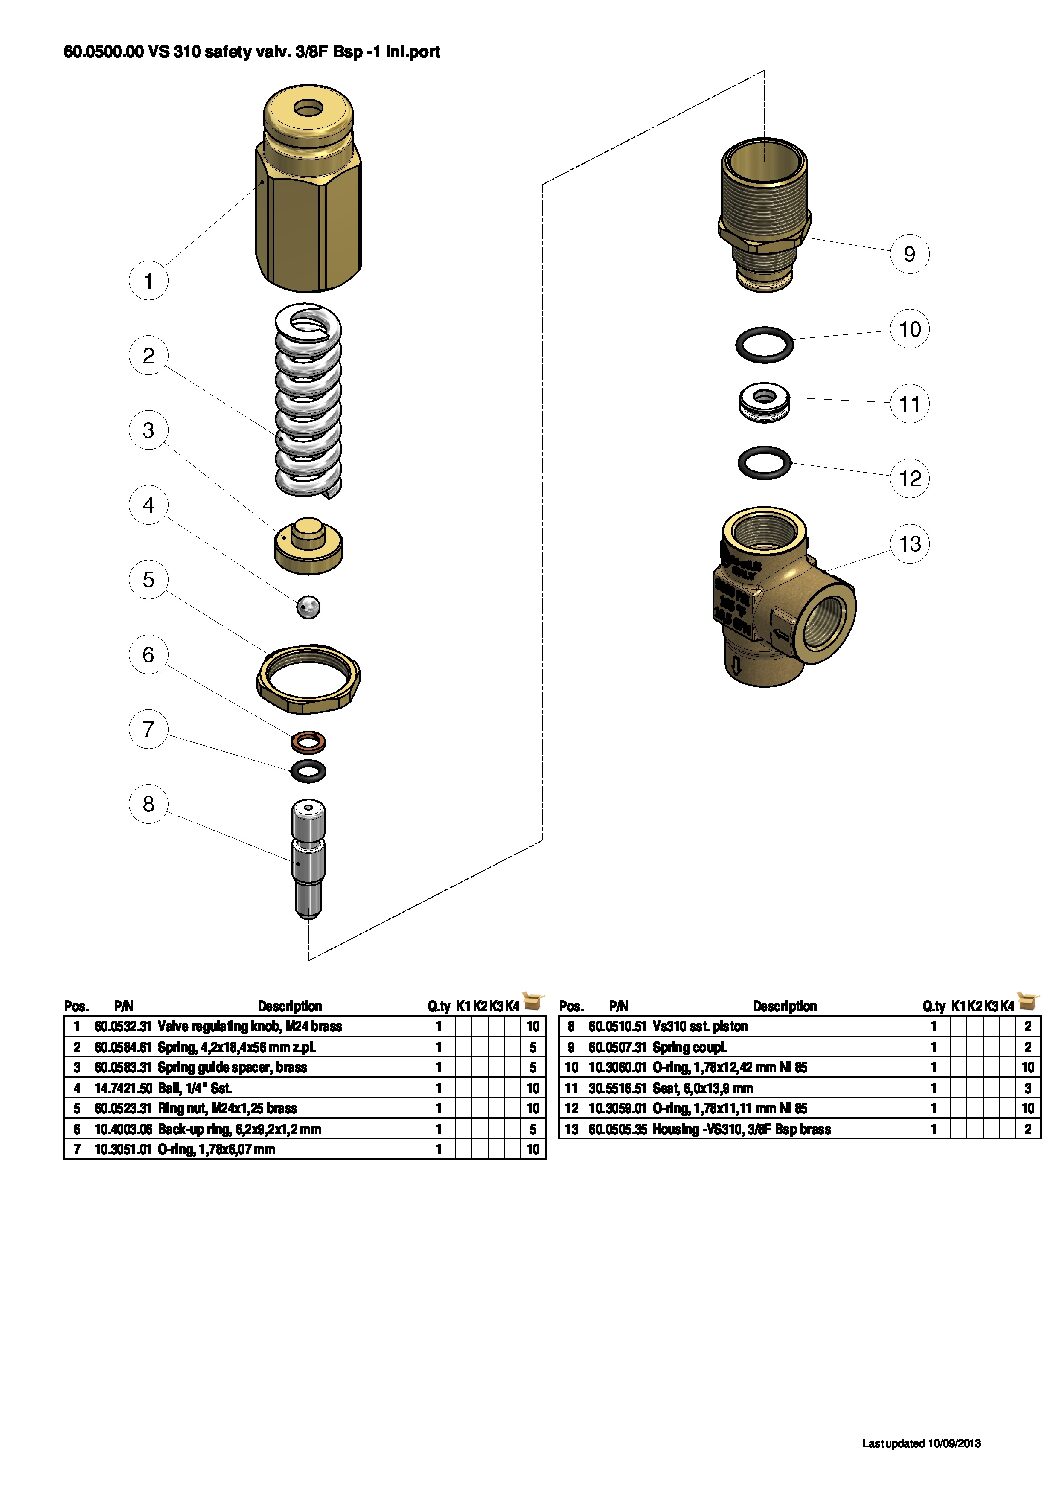 PA VS310 safety valve parts breakdown